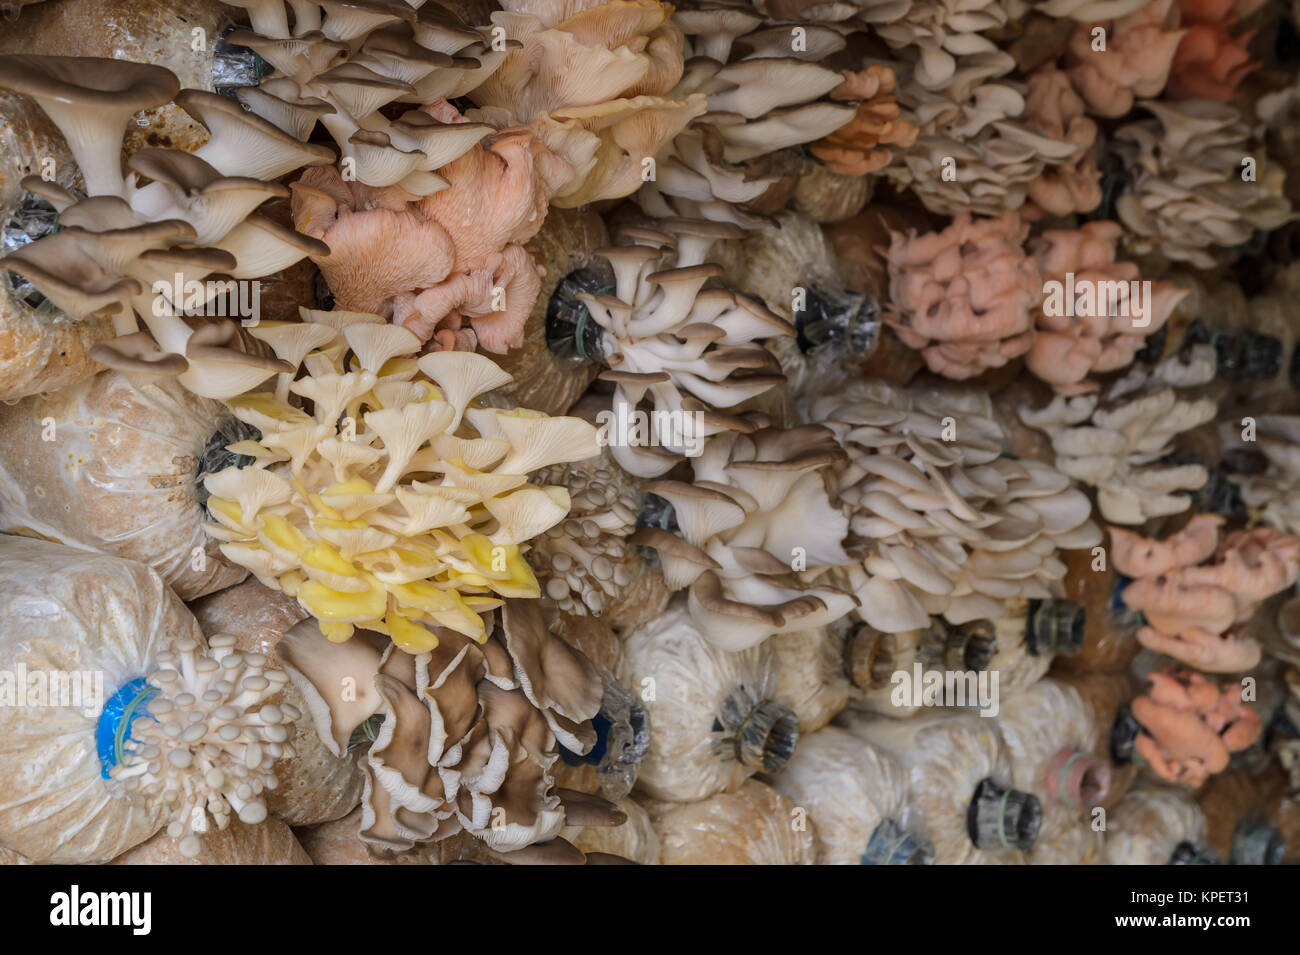 https://c8.alamy.com/comp/KPET31/oyster-mushroom-cultivation-KPET31.jpg